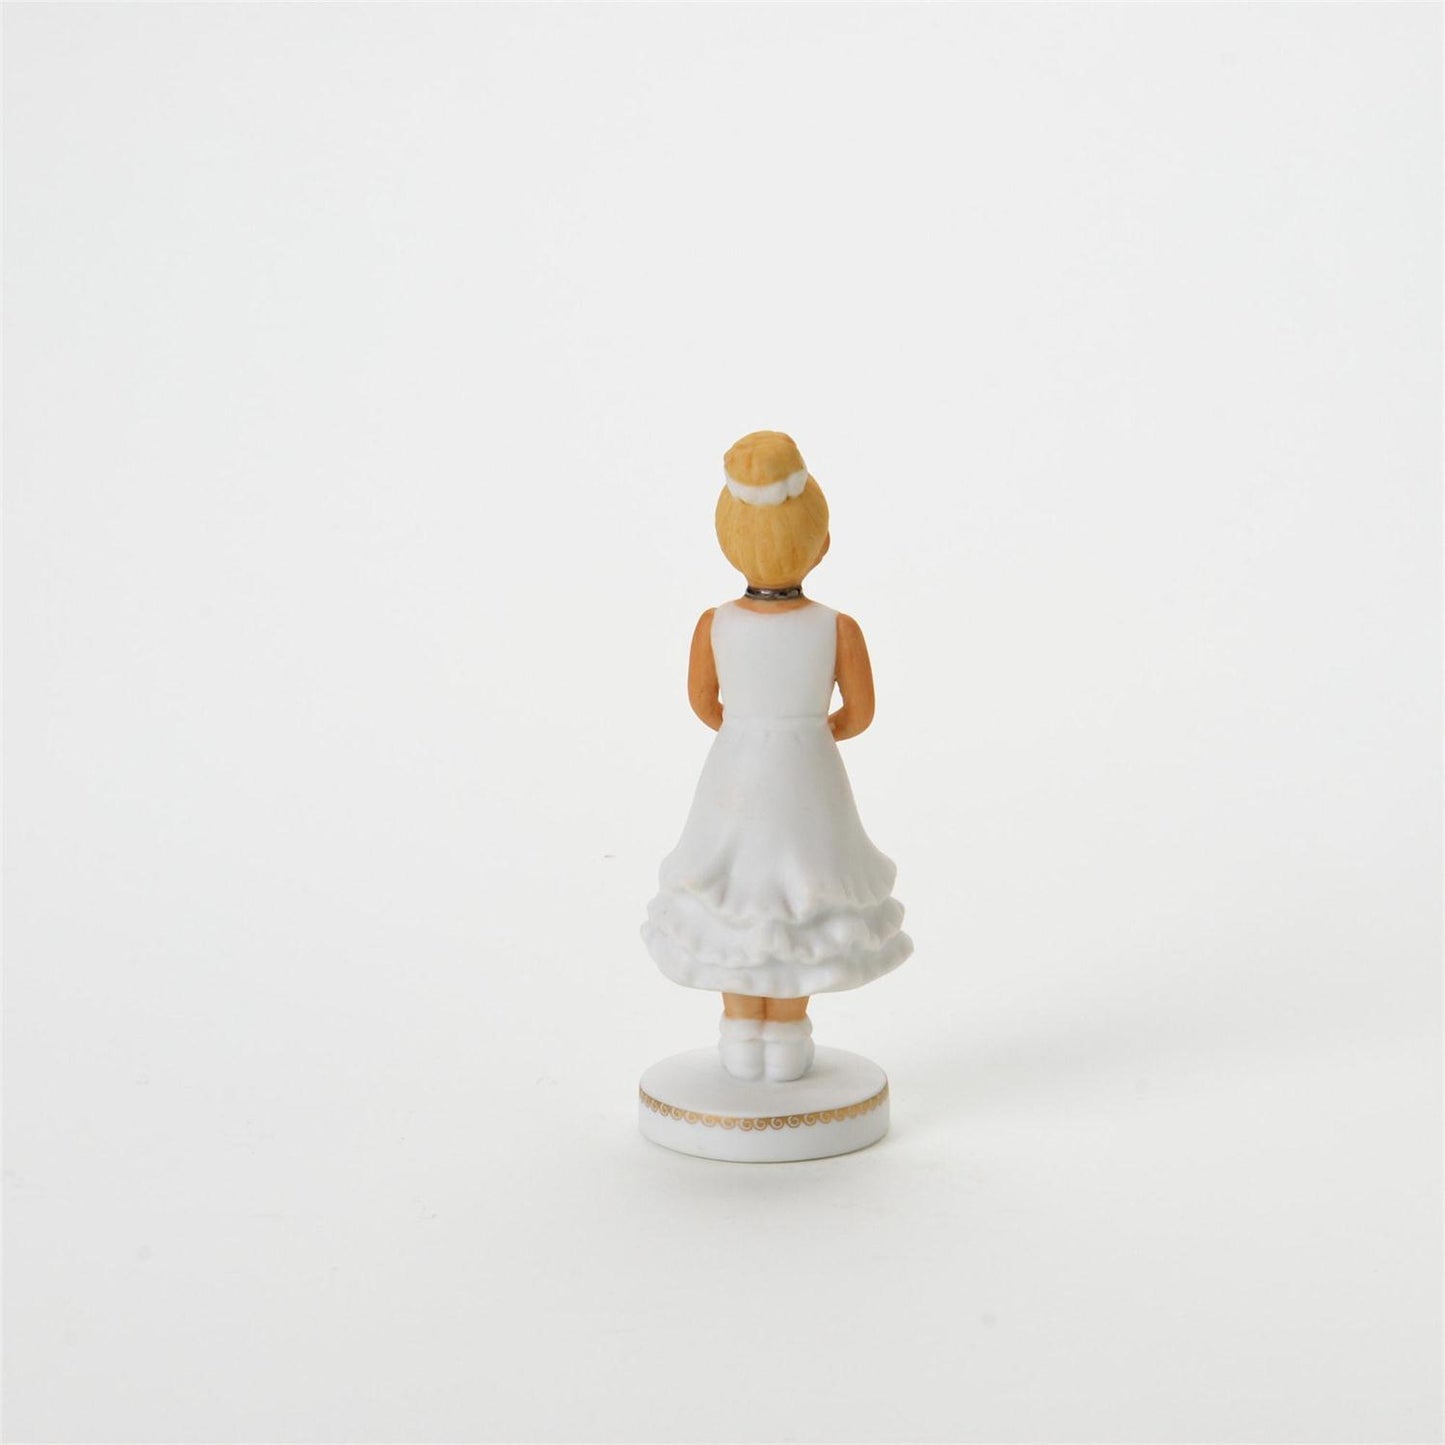 1st Communion Blonde Figurine